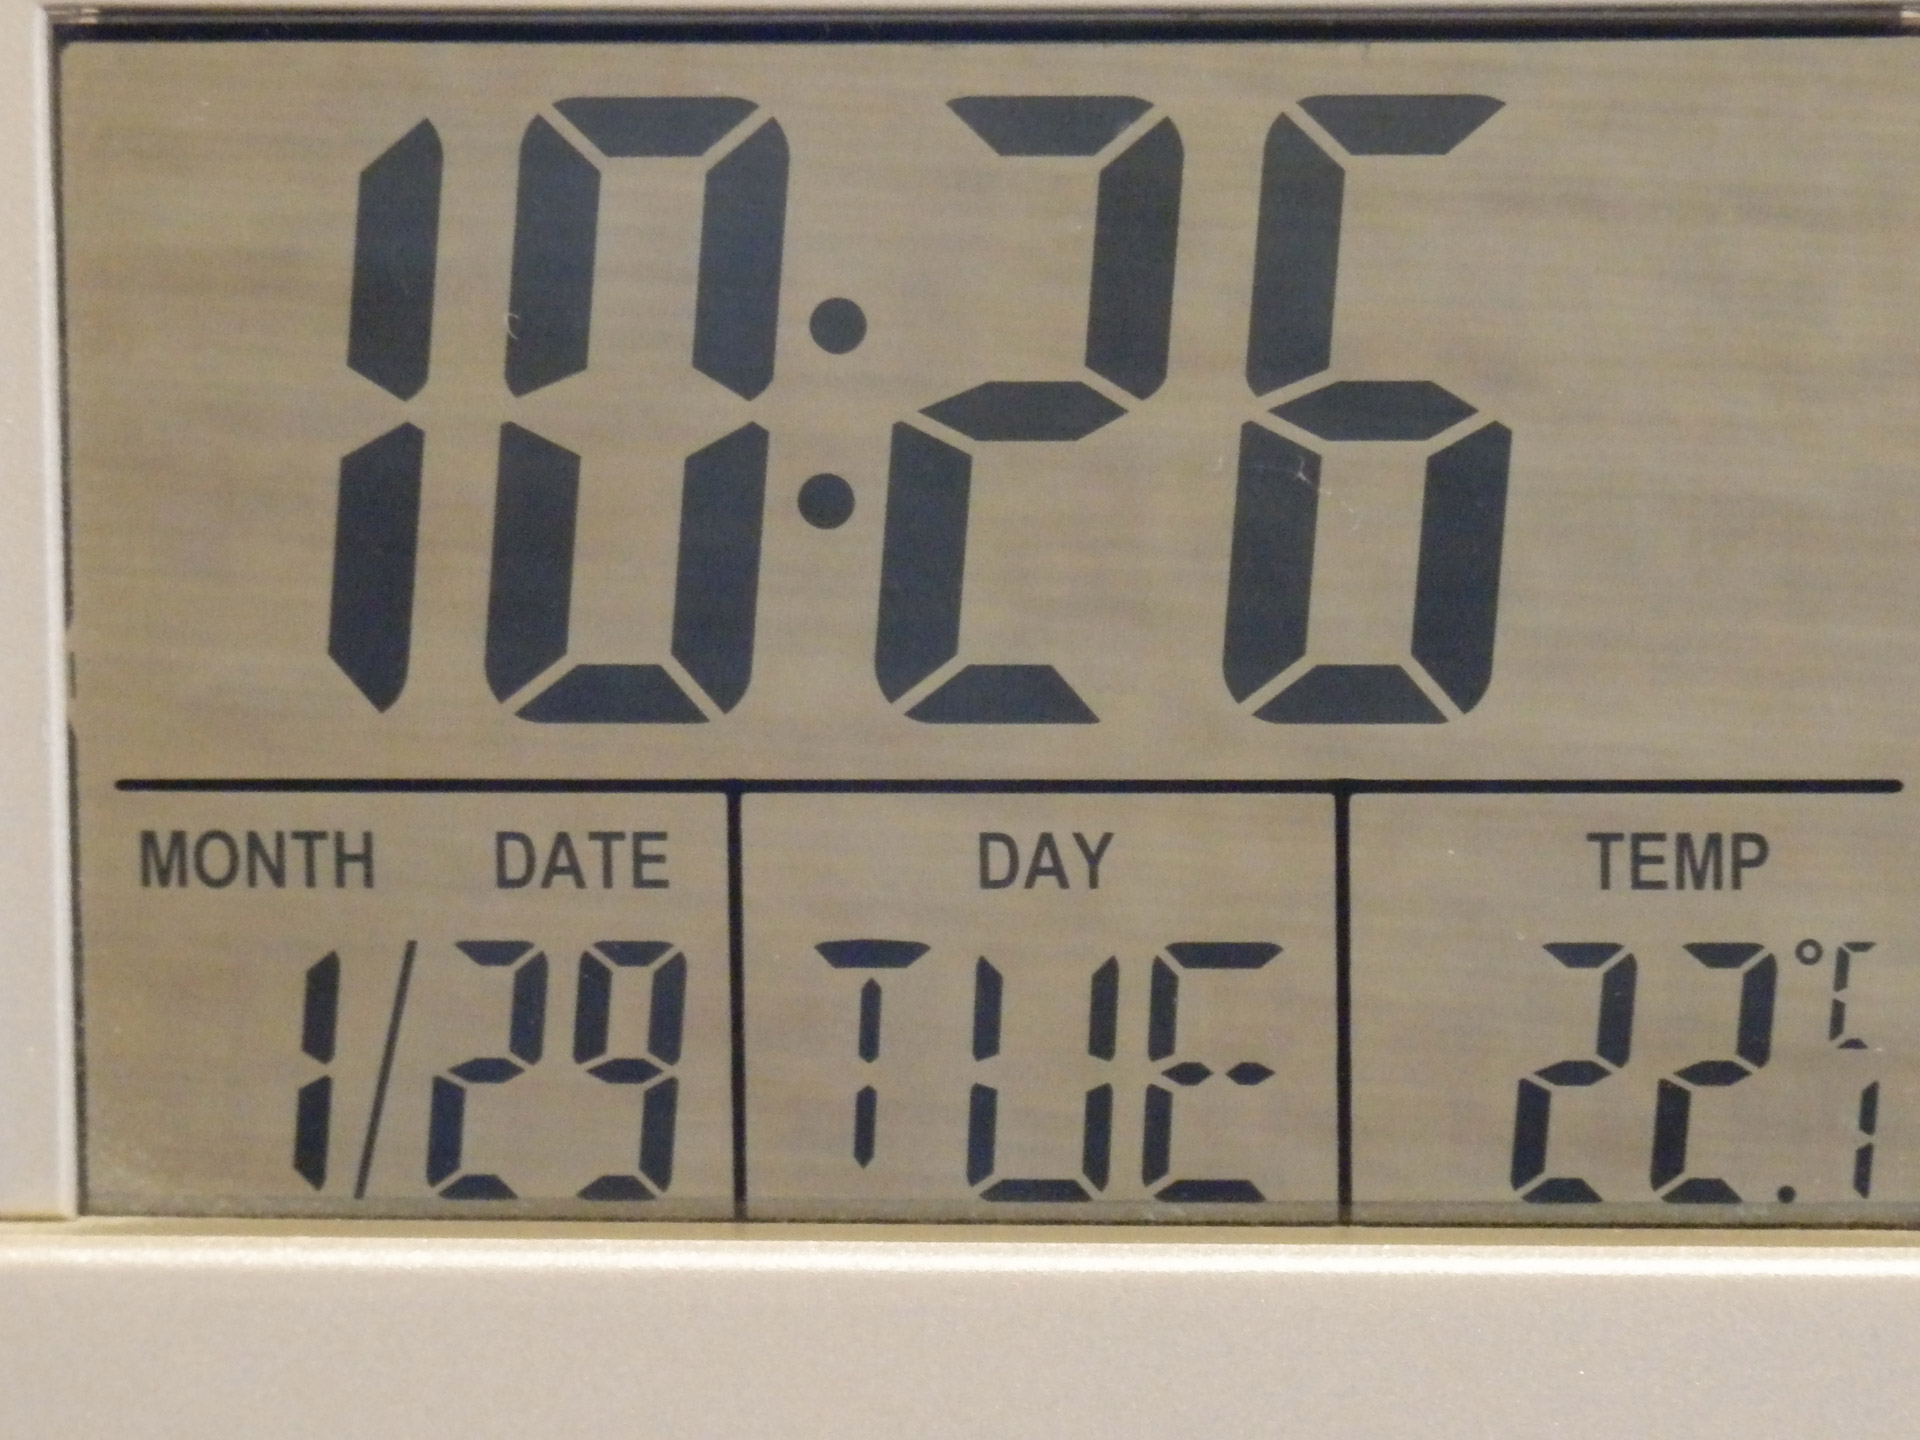 14 часов 26 минут. Часы показывают час. Цифры электронных часов. Часы настенные цифровые электронные круглые. Электронные часы с временем 11:10.